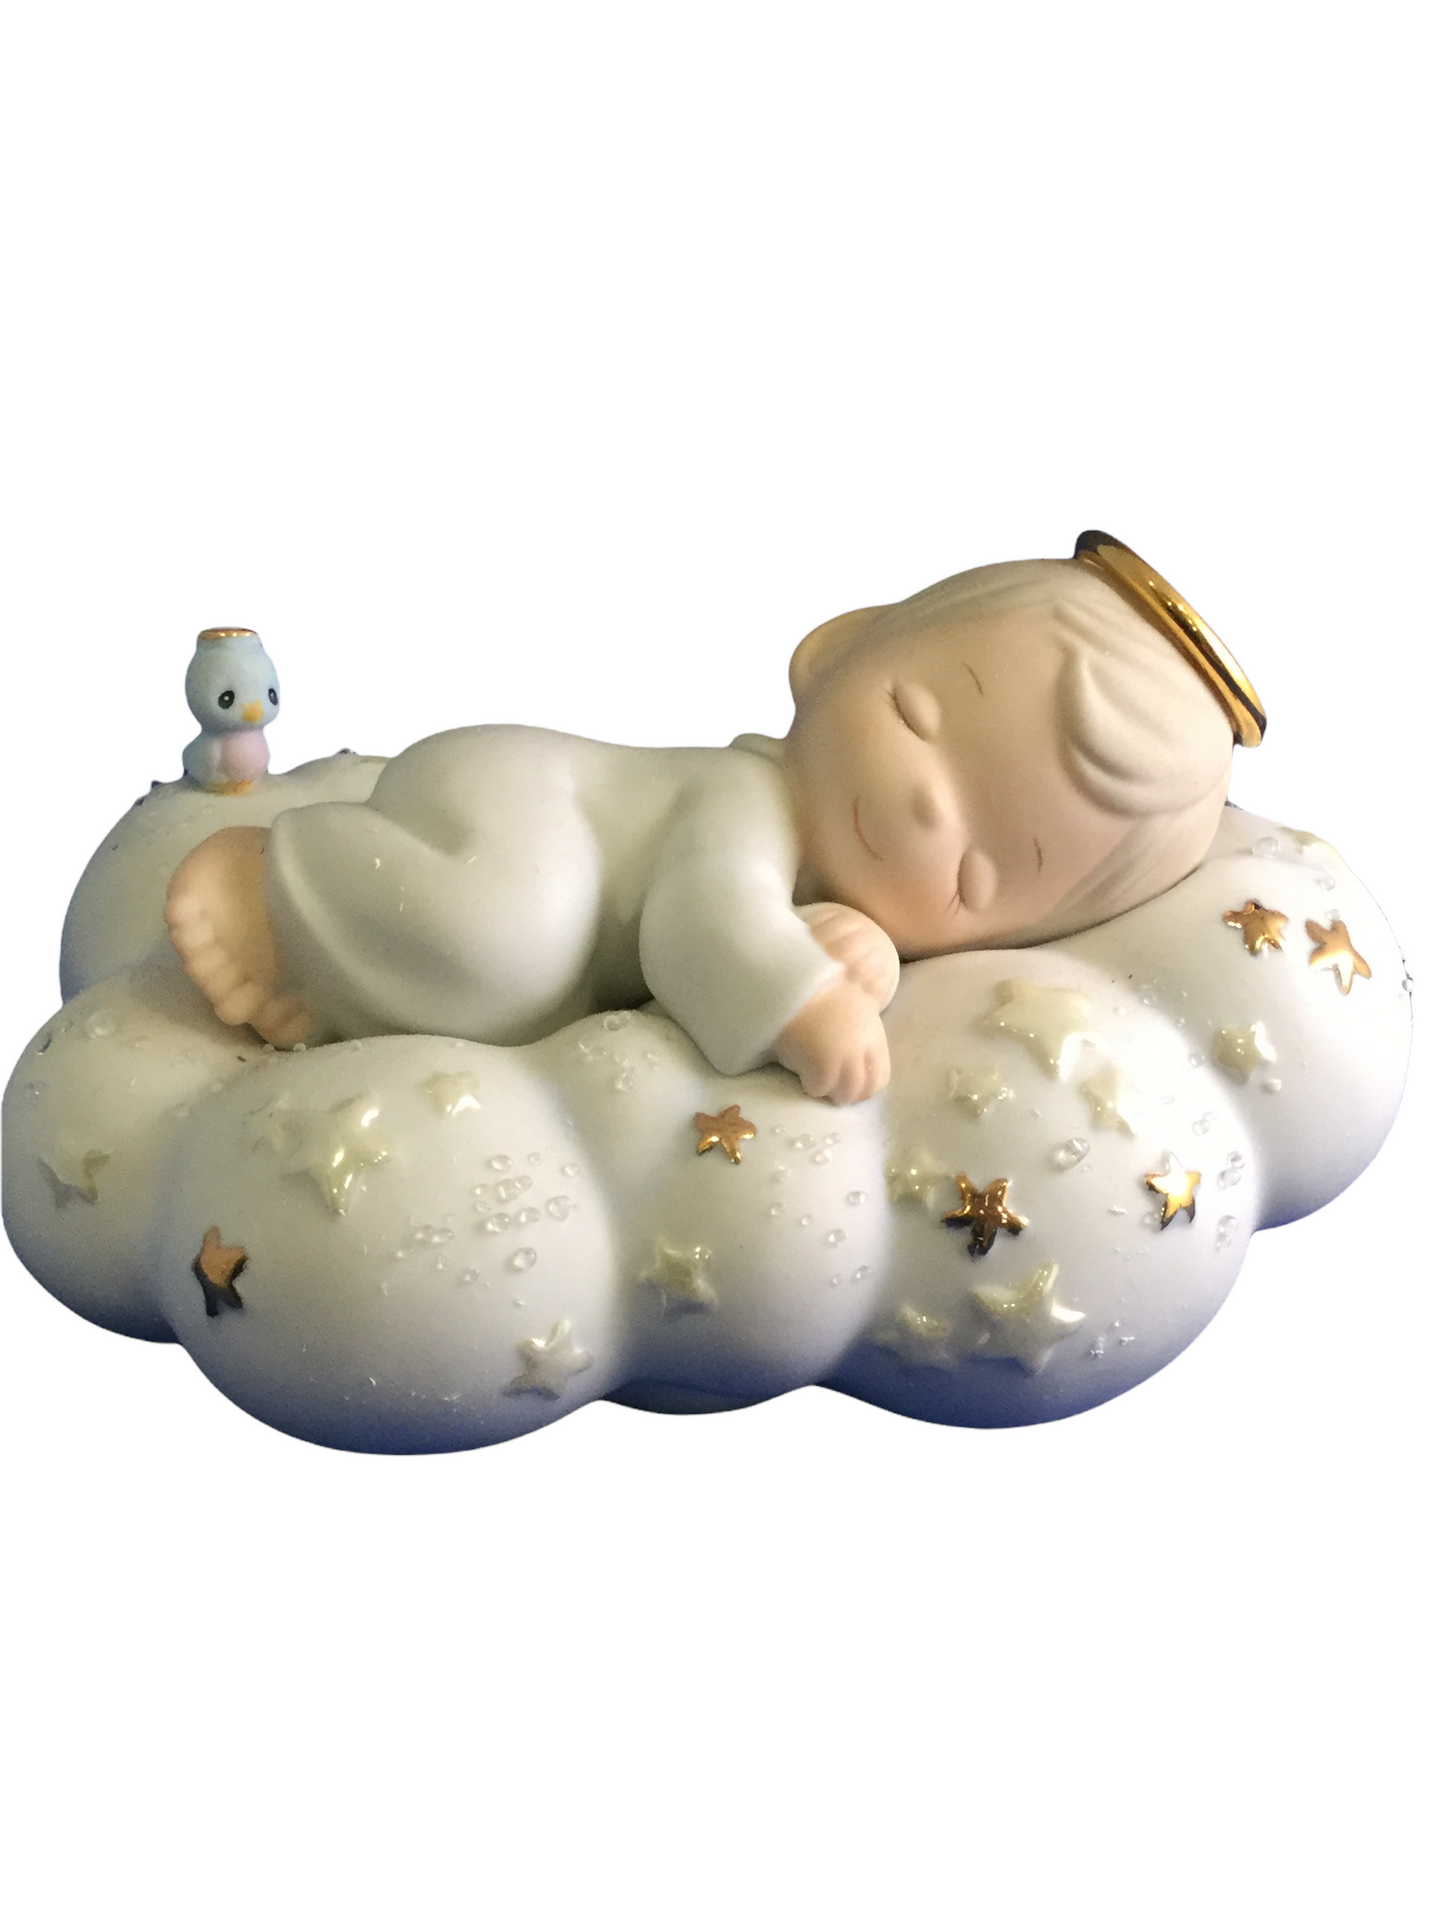 Sleep In Heavenly Peace - Precious Moment Figurine 